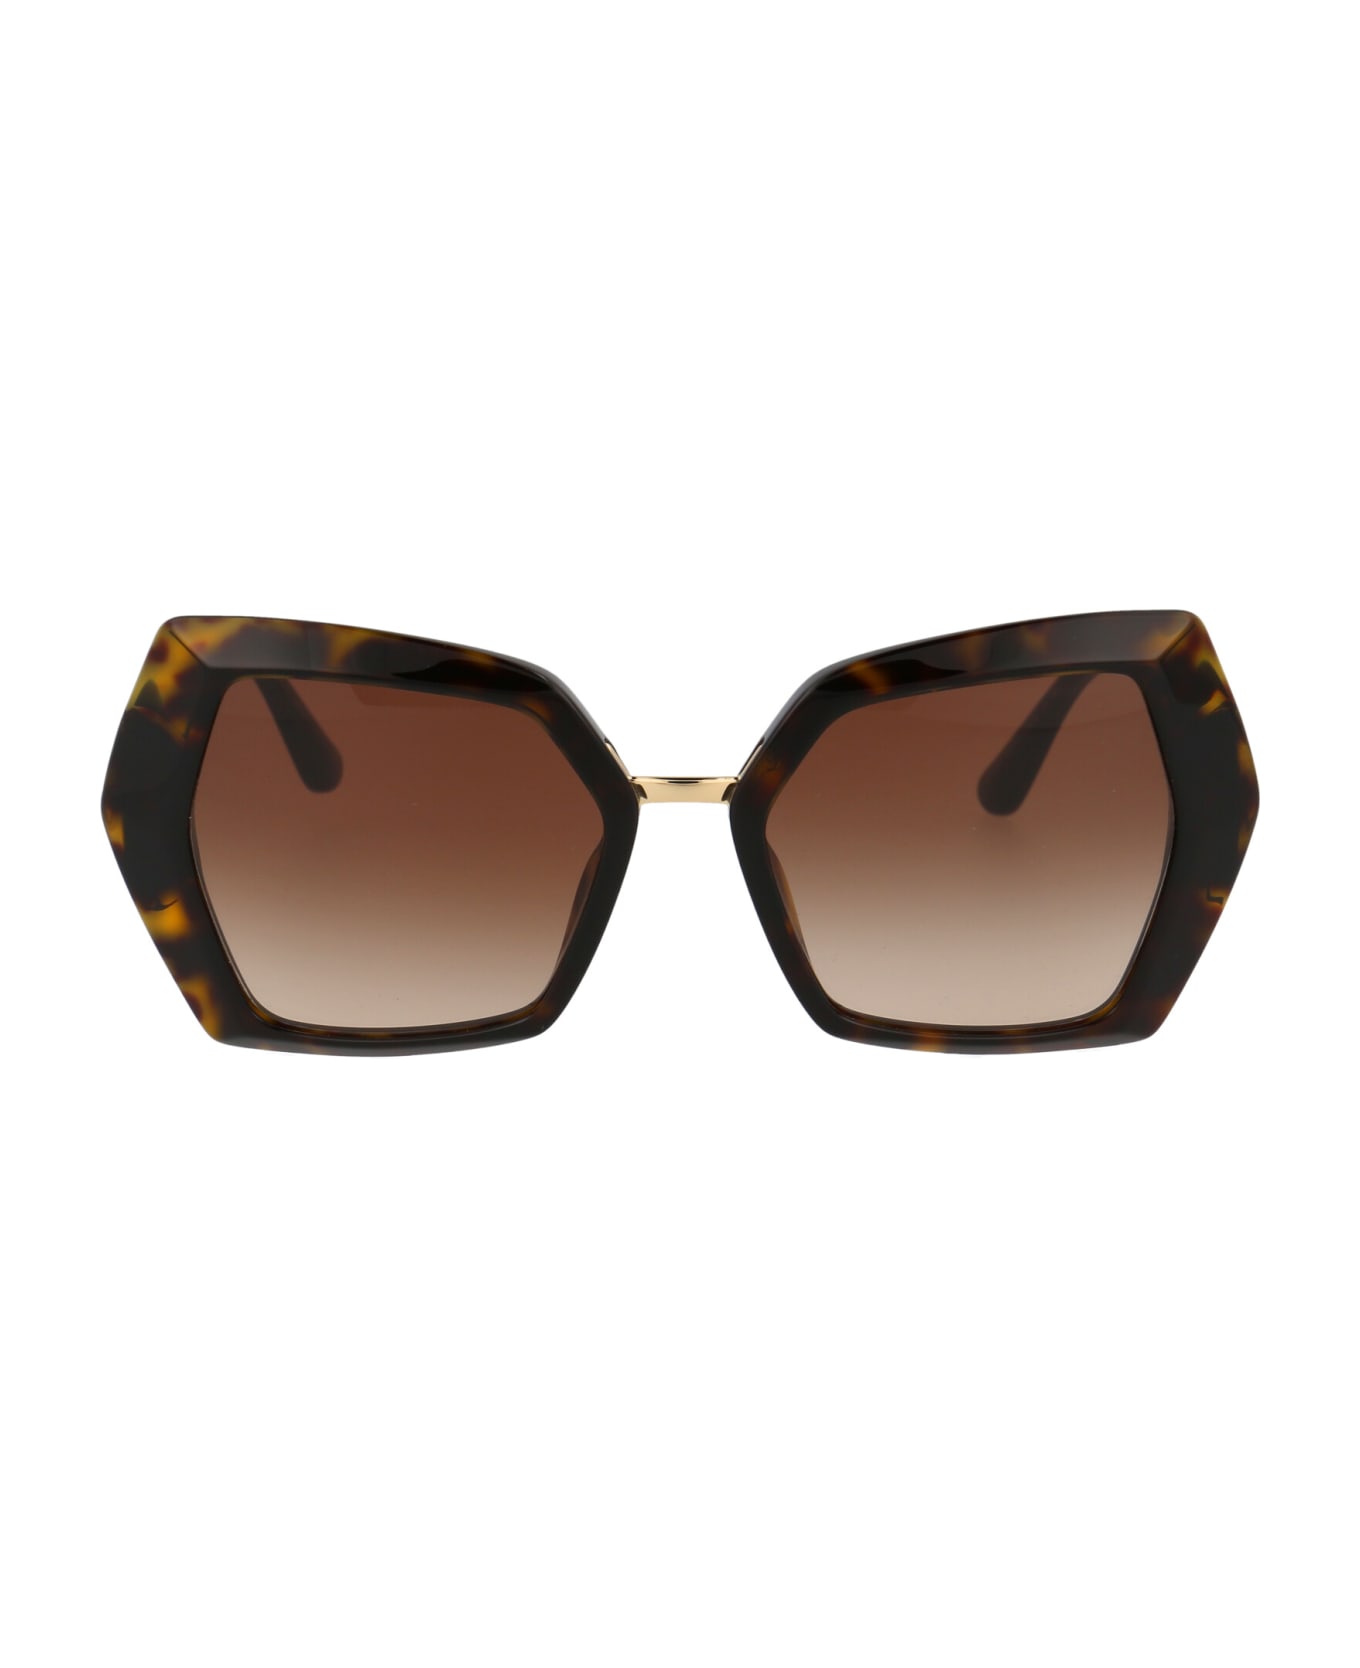 Dolce & Gabbana Eyewear 0dg4377 Sunglasses - 502/13 HAVANA サングラス